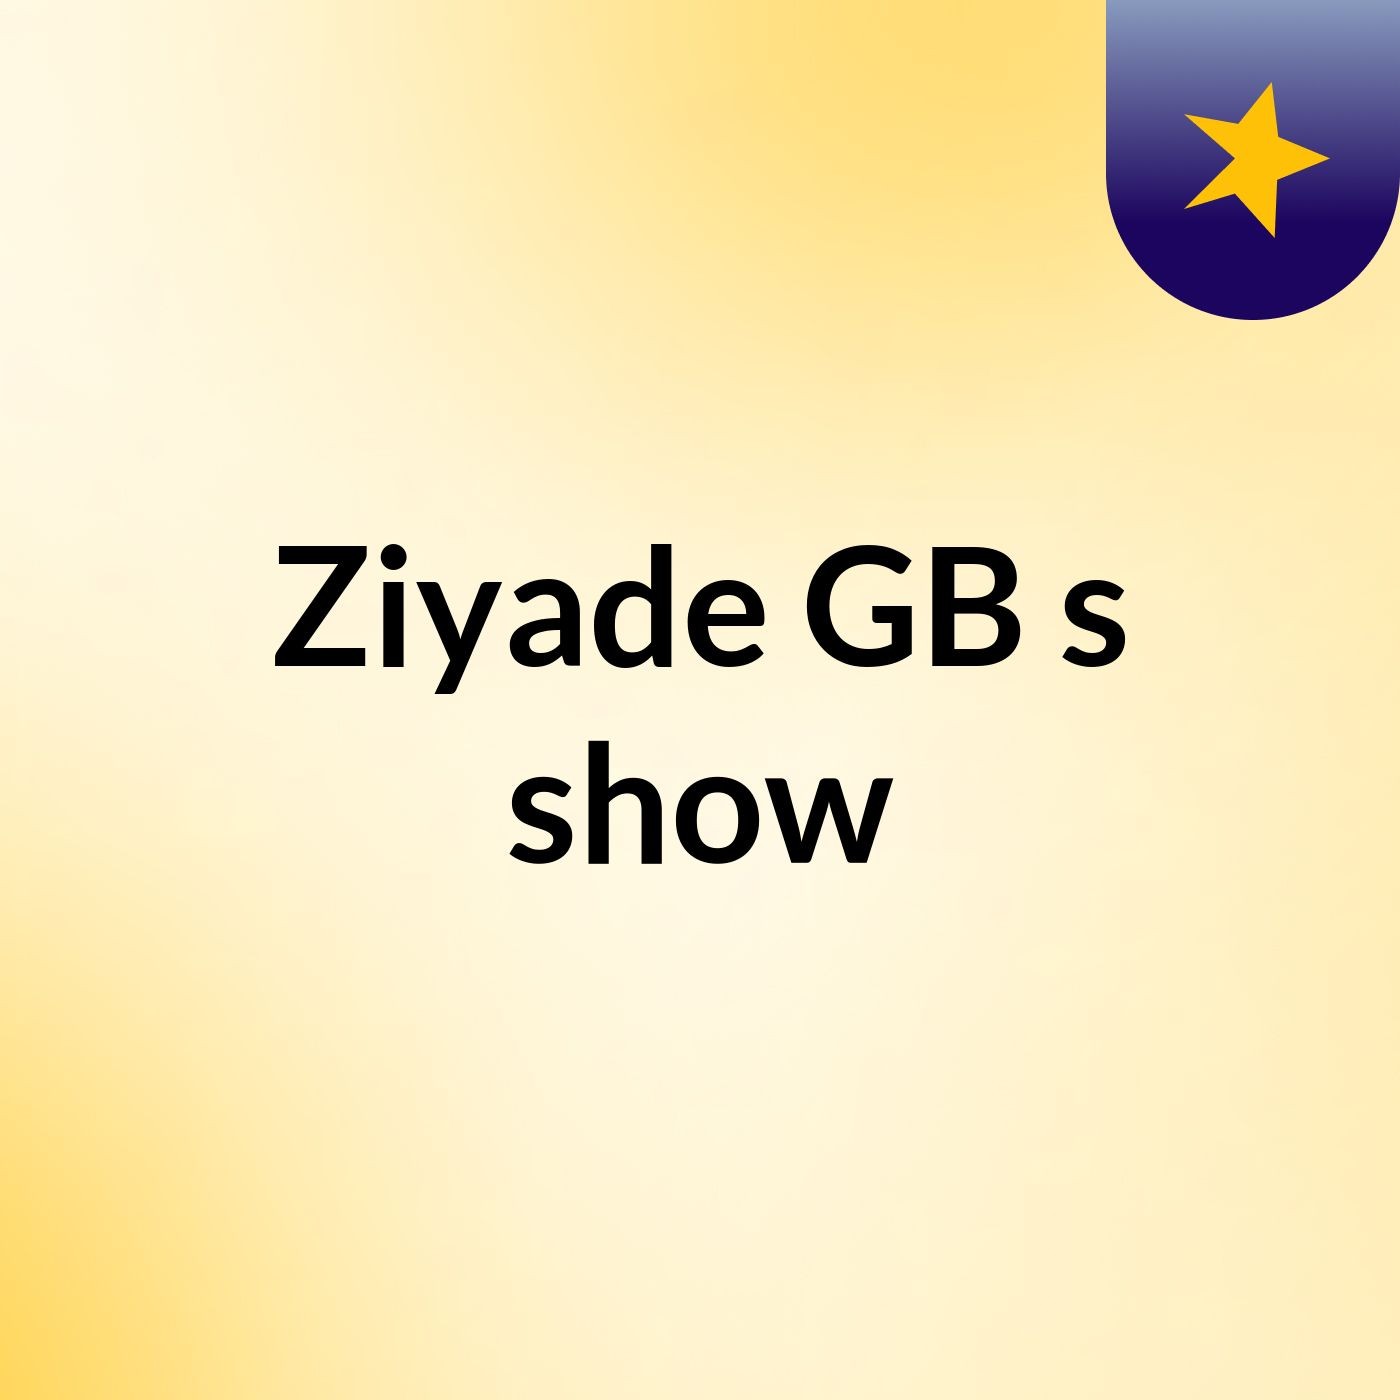 Ziyade GB's show